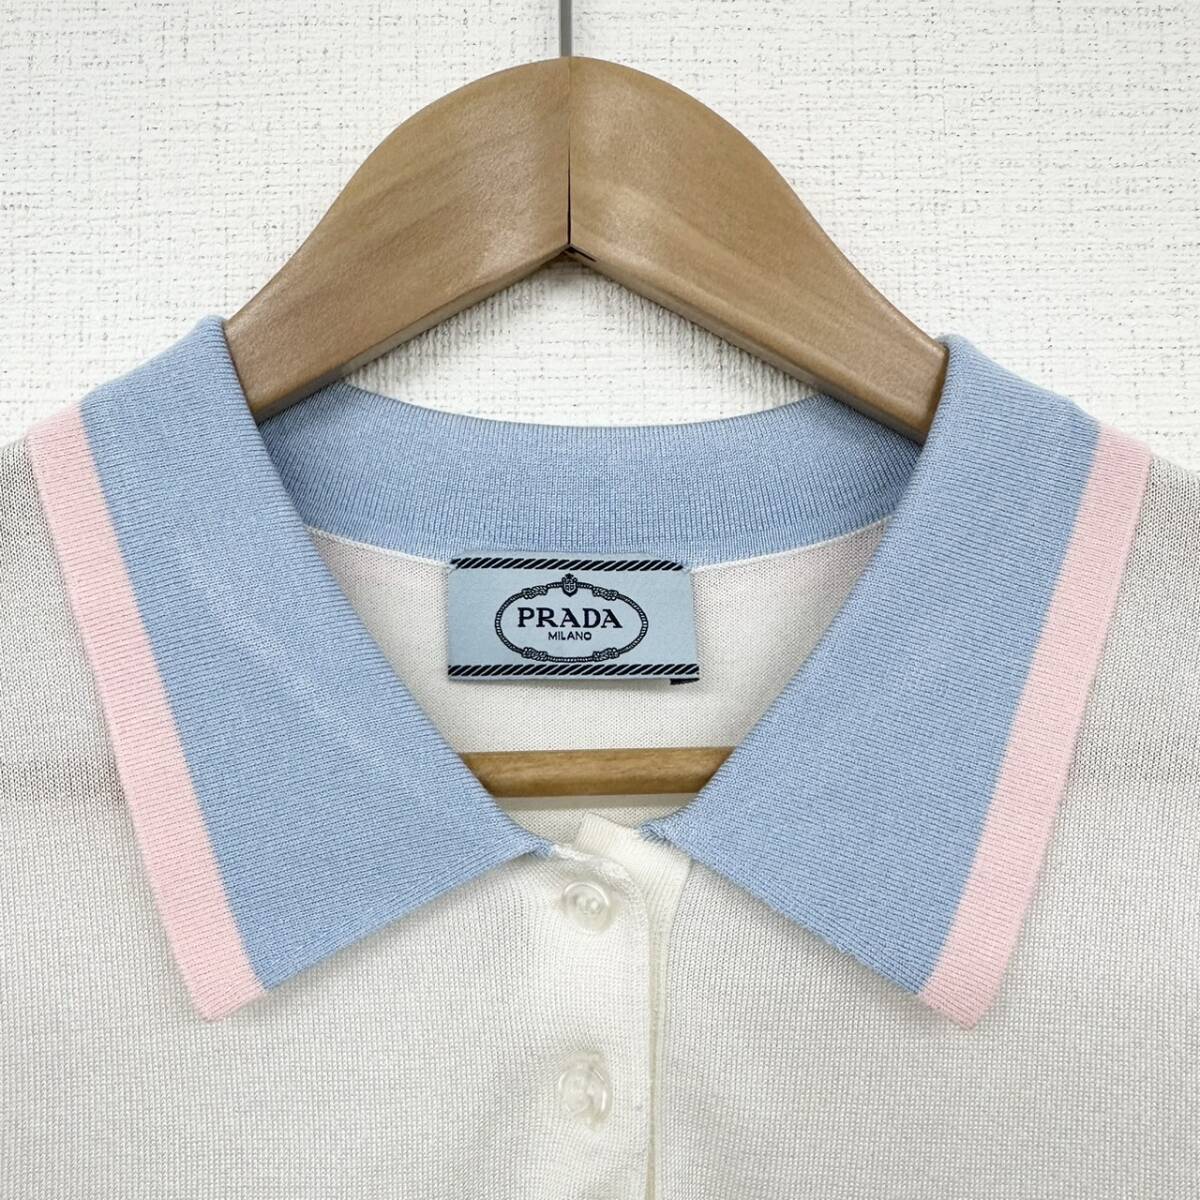 PRADA Prada silk polo-shirt white blue pink size 38 2020 year tops short sleeves Short sleeve Polo wi men's 